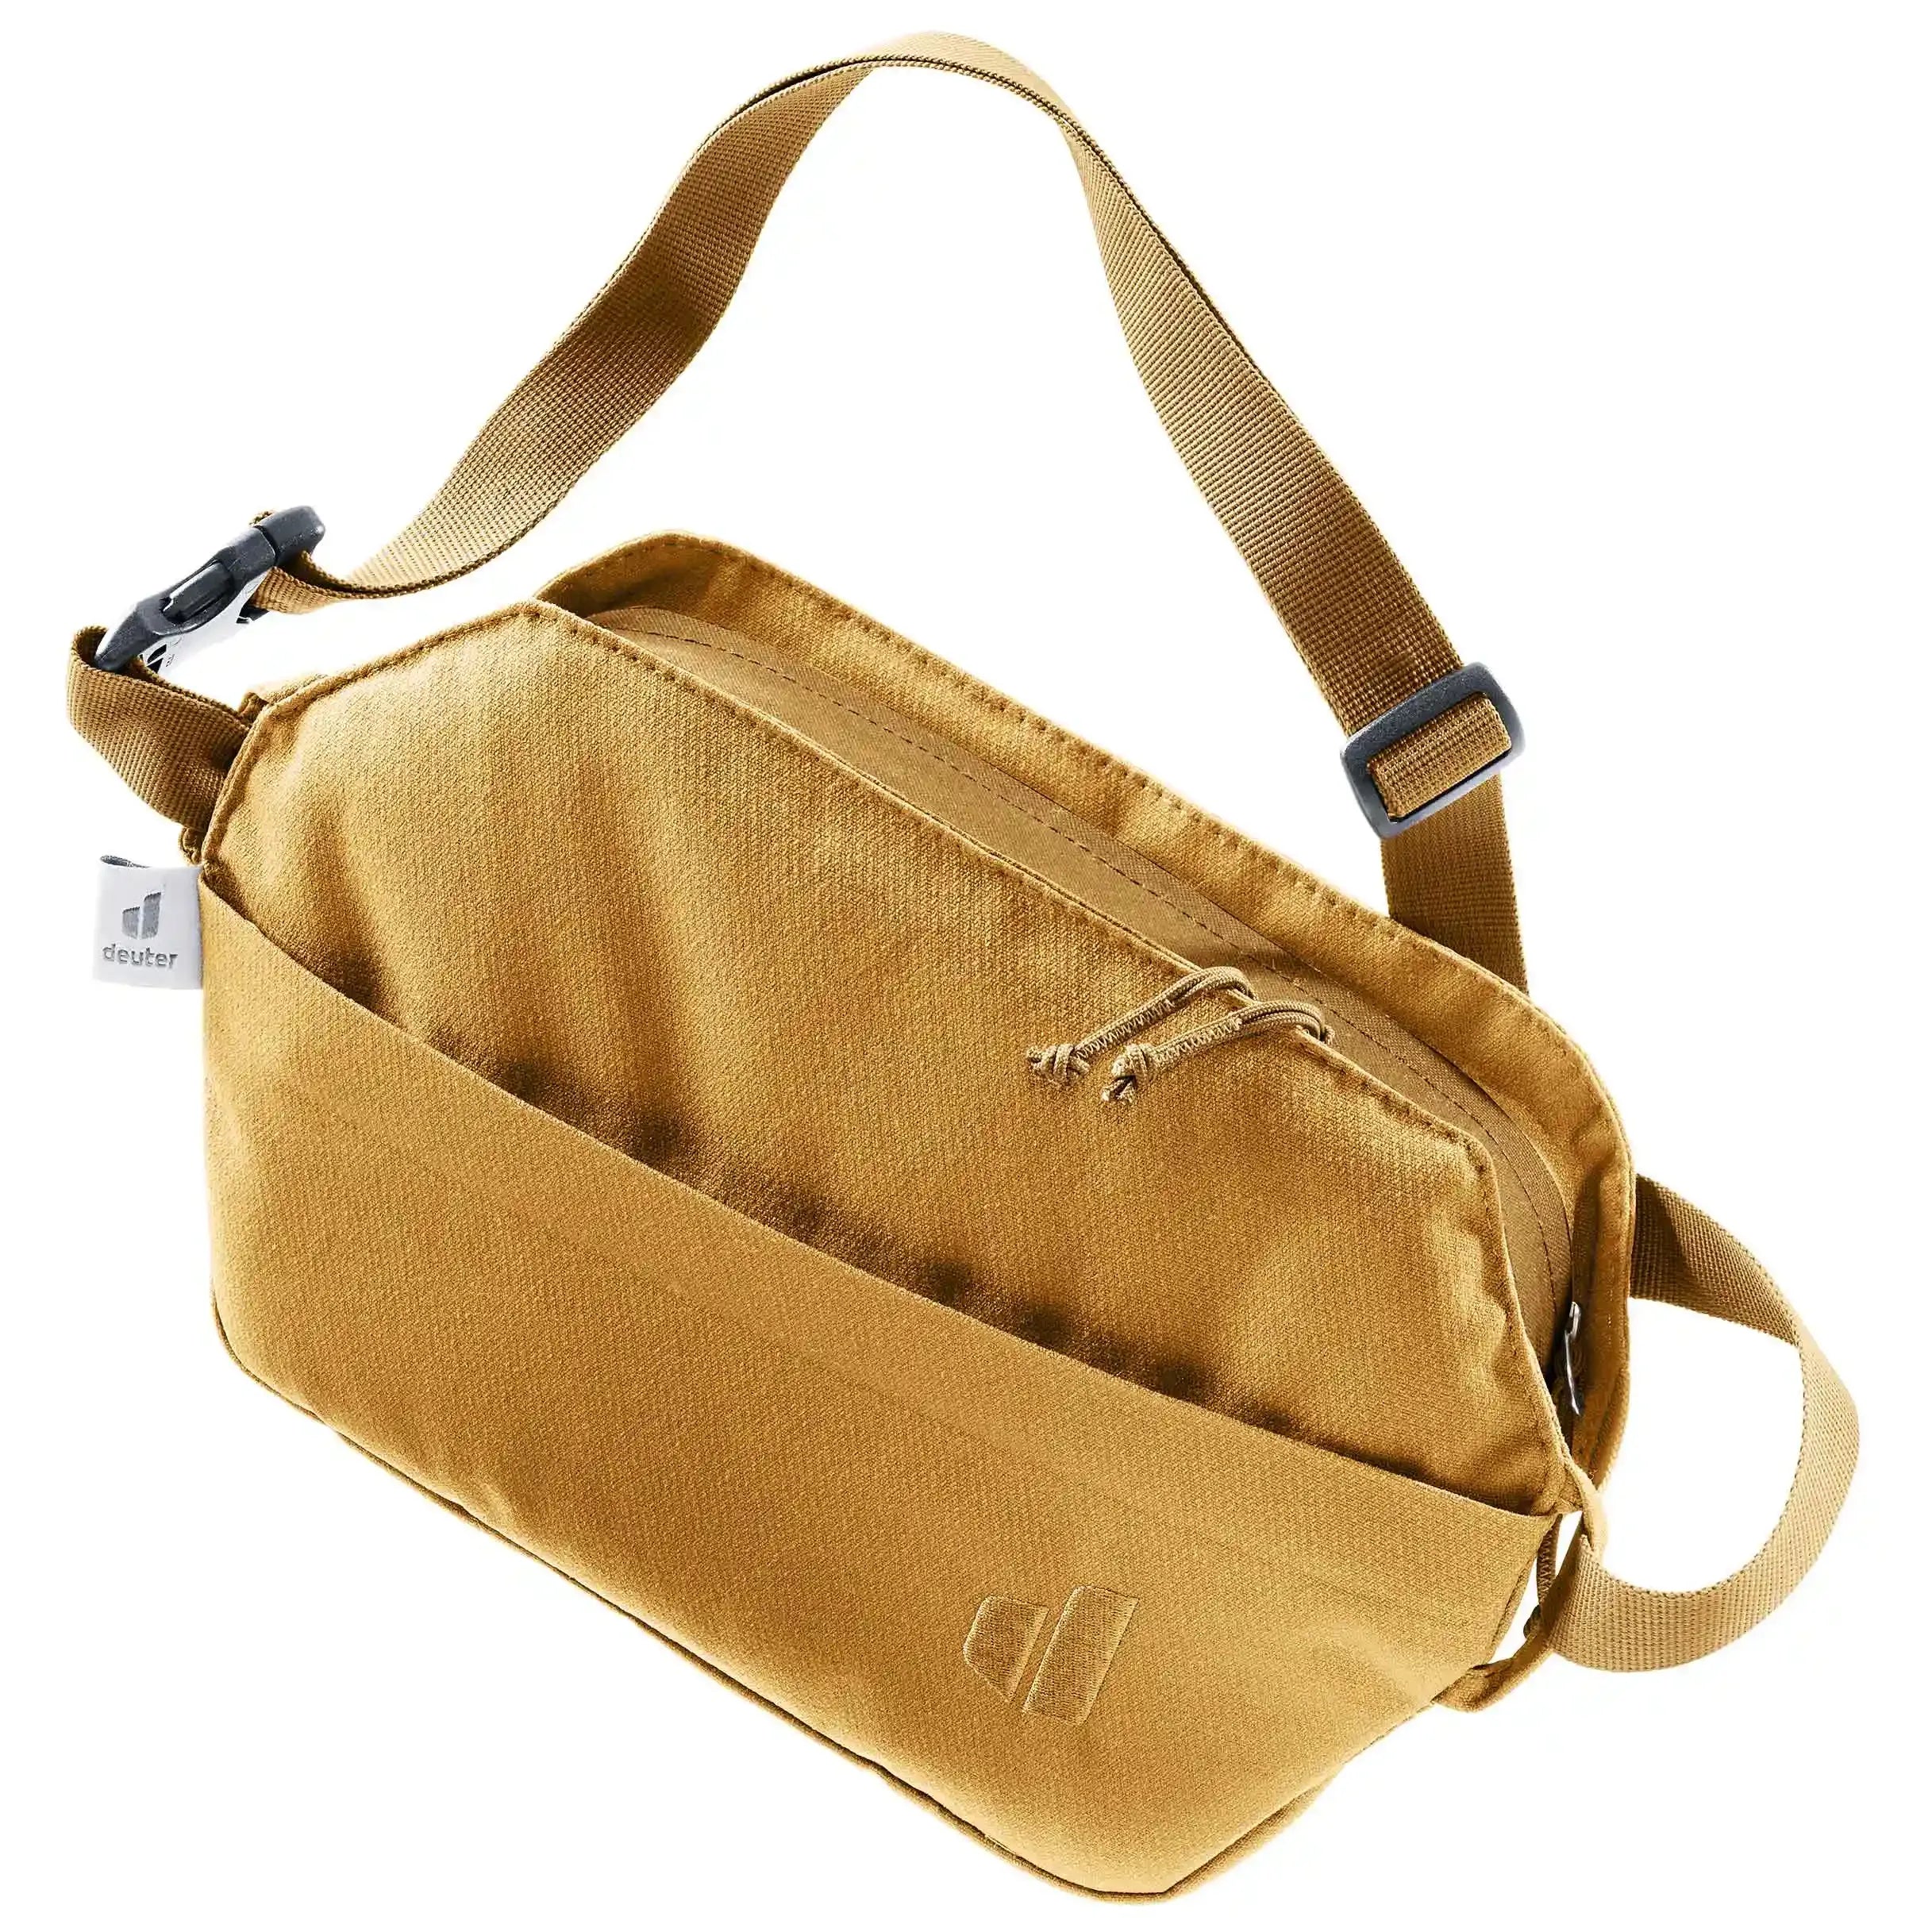 Deuter Accessories Passway 2 Crossbody Bag 28 cm - cinnamon-almond